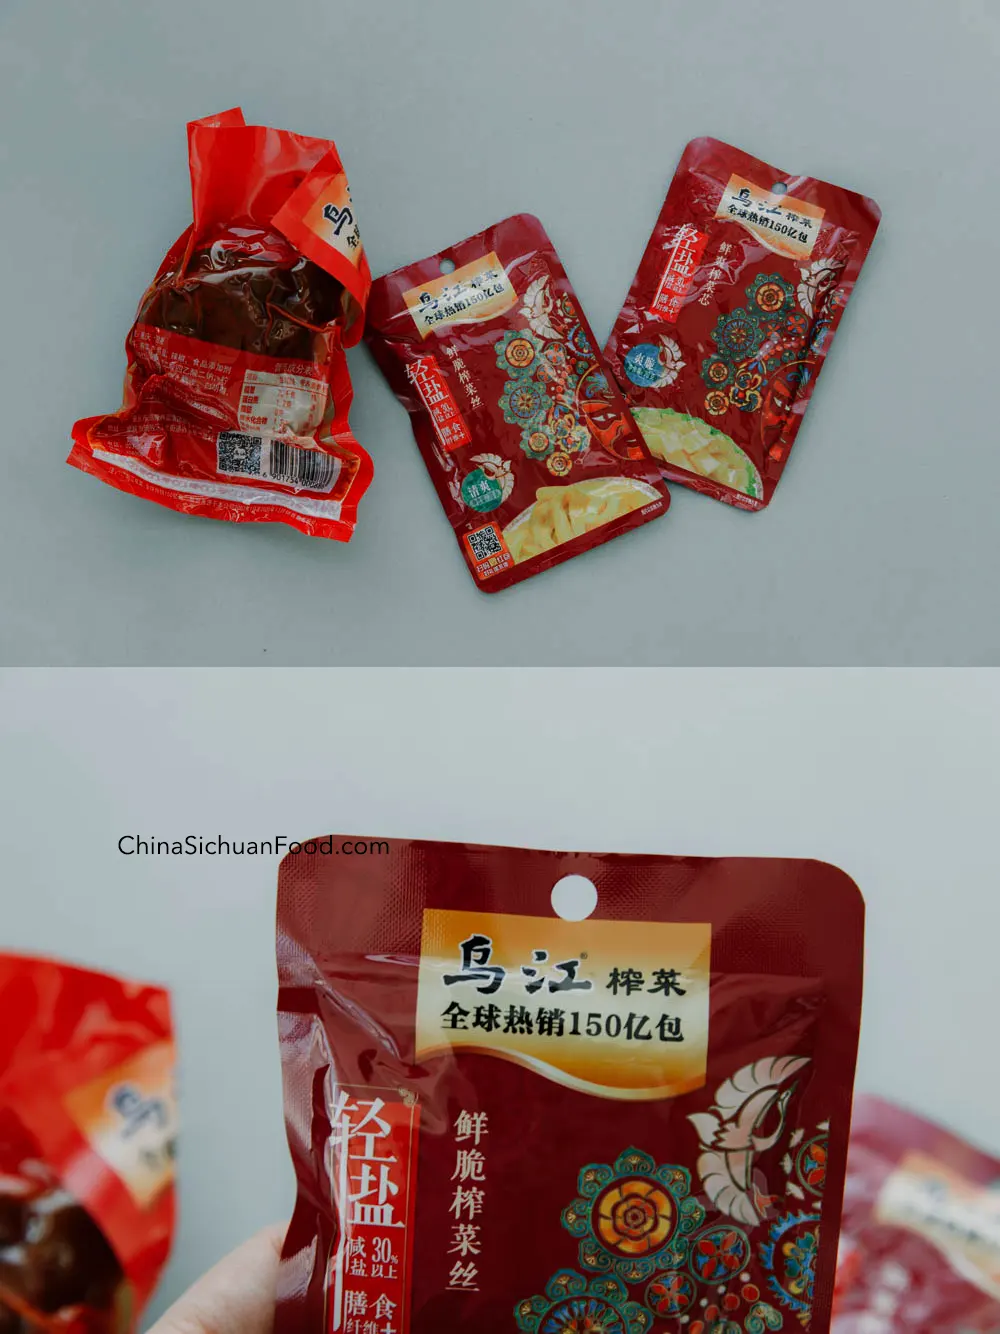 zha cai package|chinasichuanfood.com